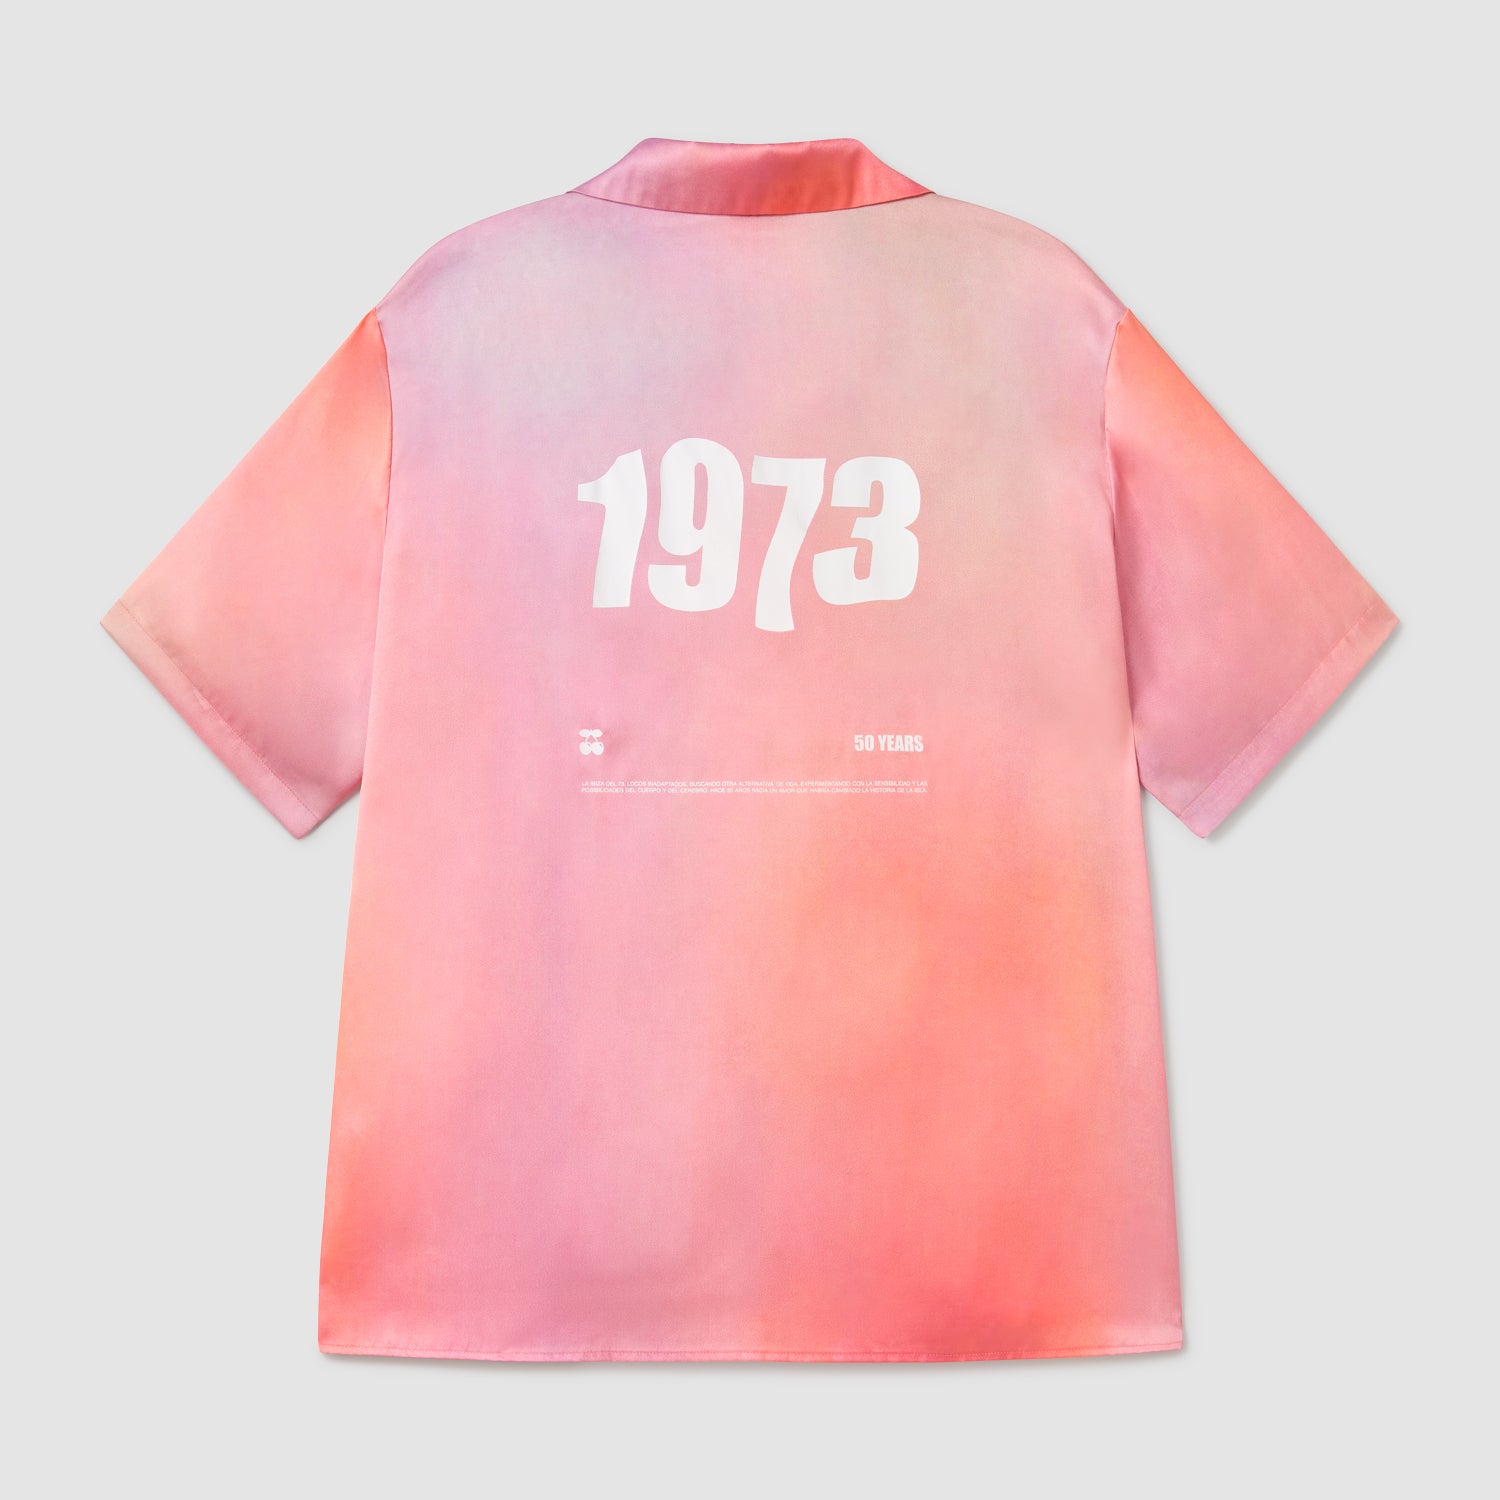 1973 Tye Dye Shirt